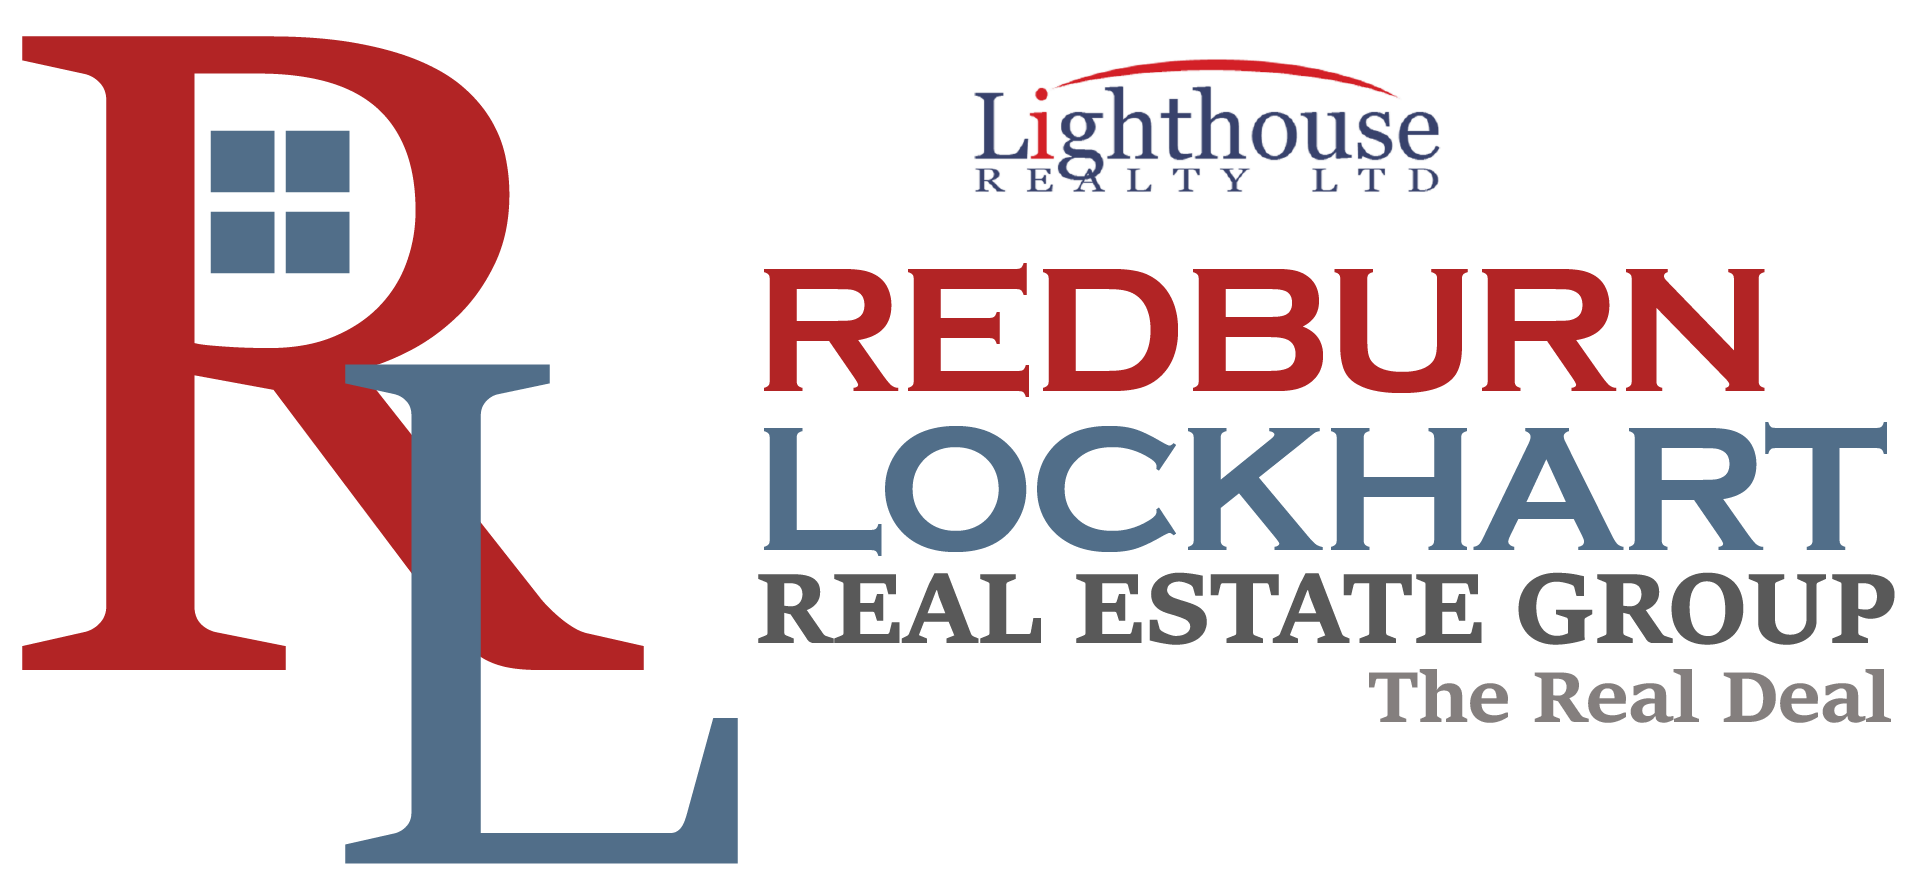 Redburn Lockhart Real Estate Group